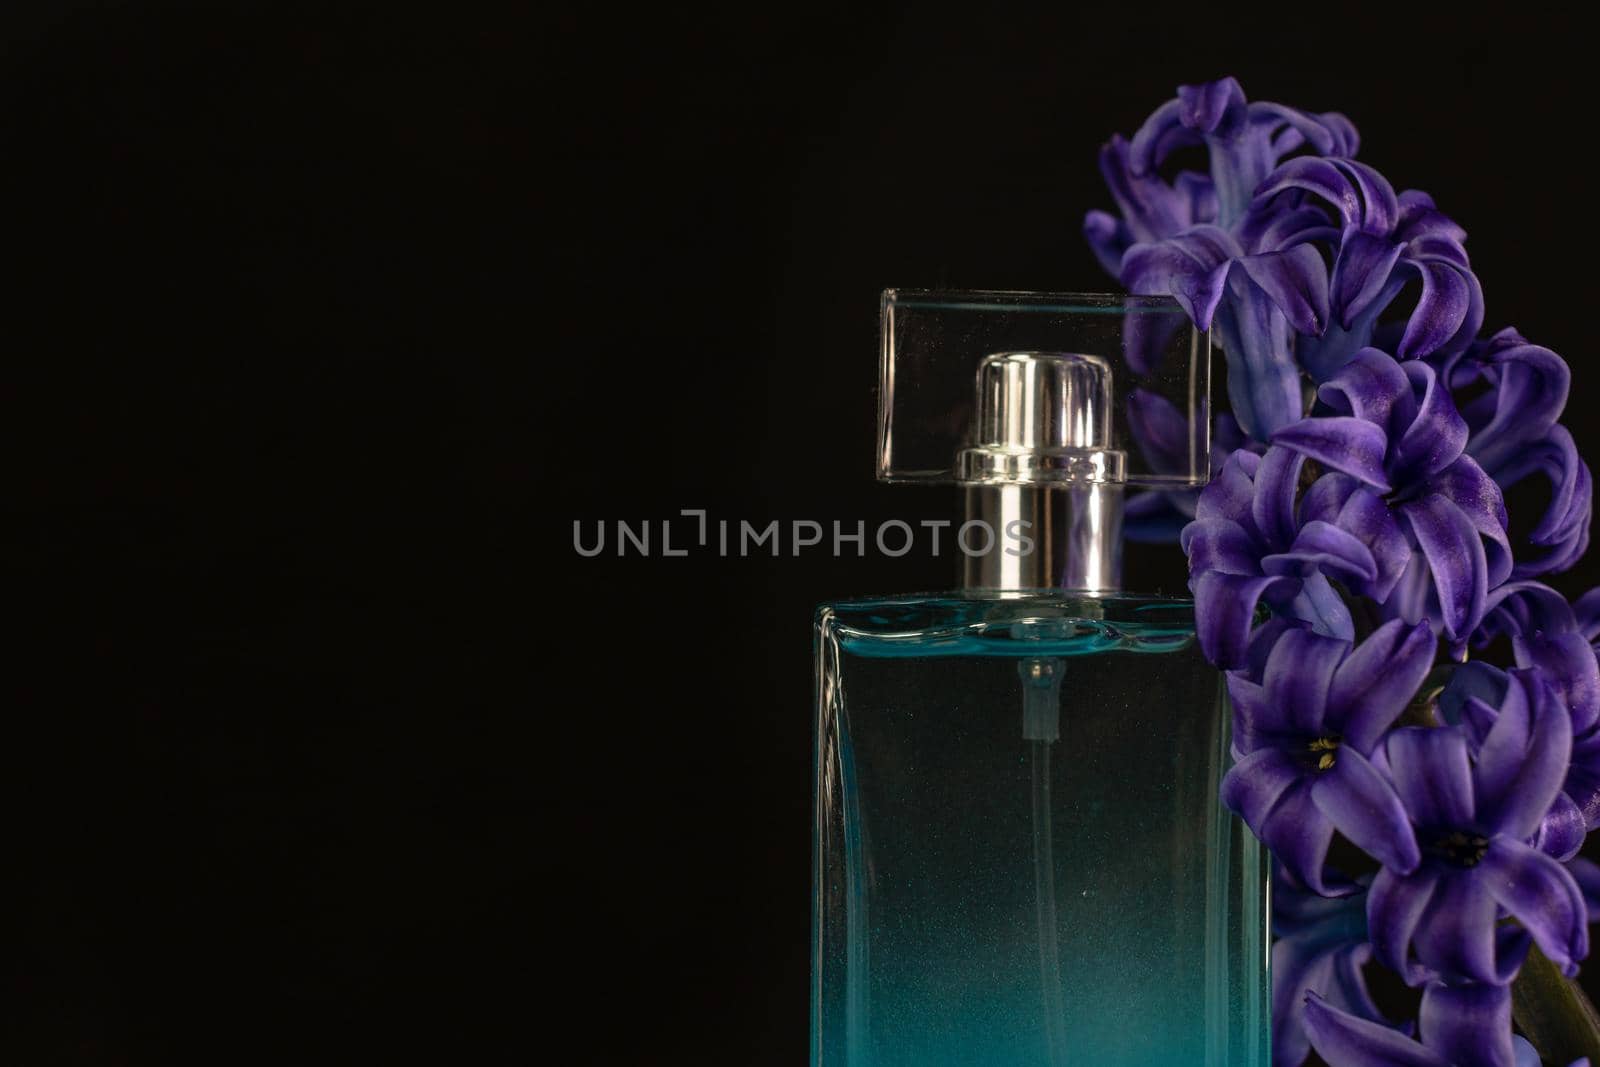 Elegant perfume bottle isolated on black background with copy space.